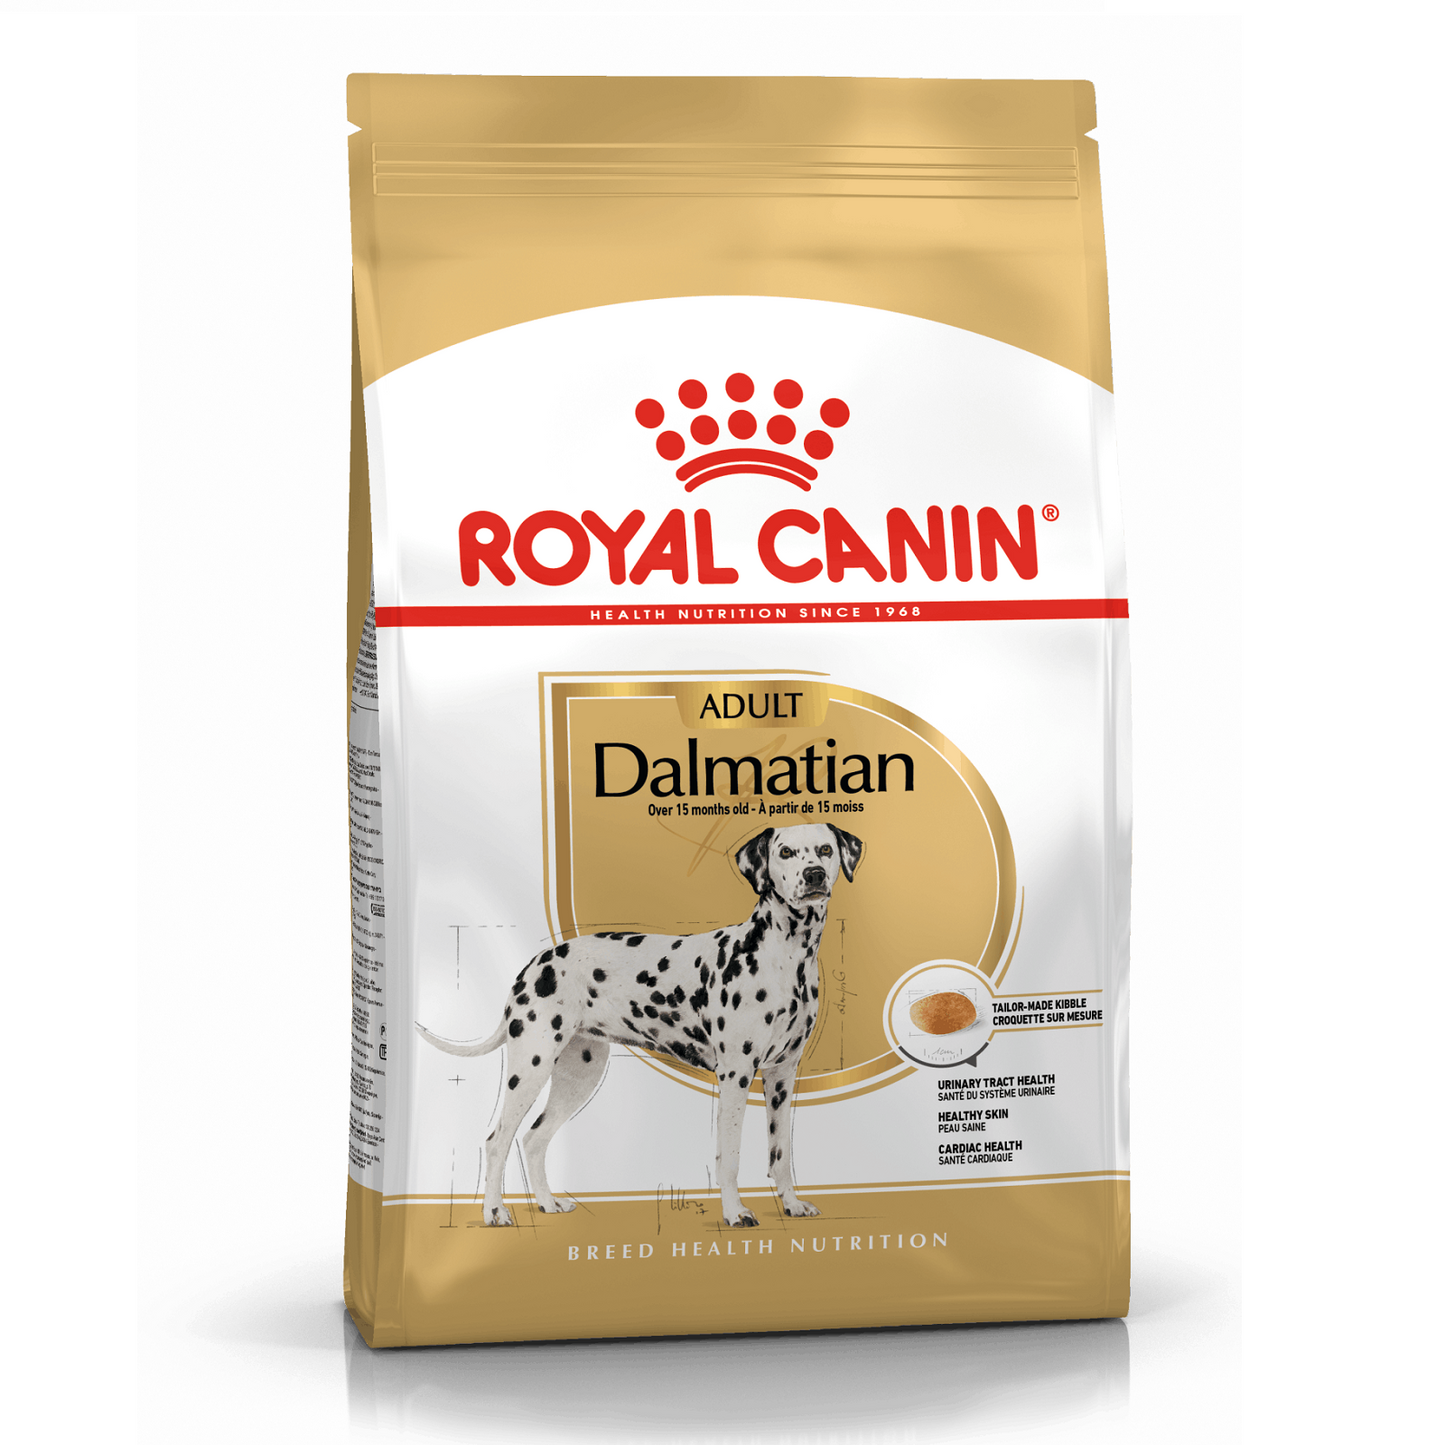 ROYAL CANIN - Dalmatian Adult (12kg)